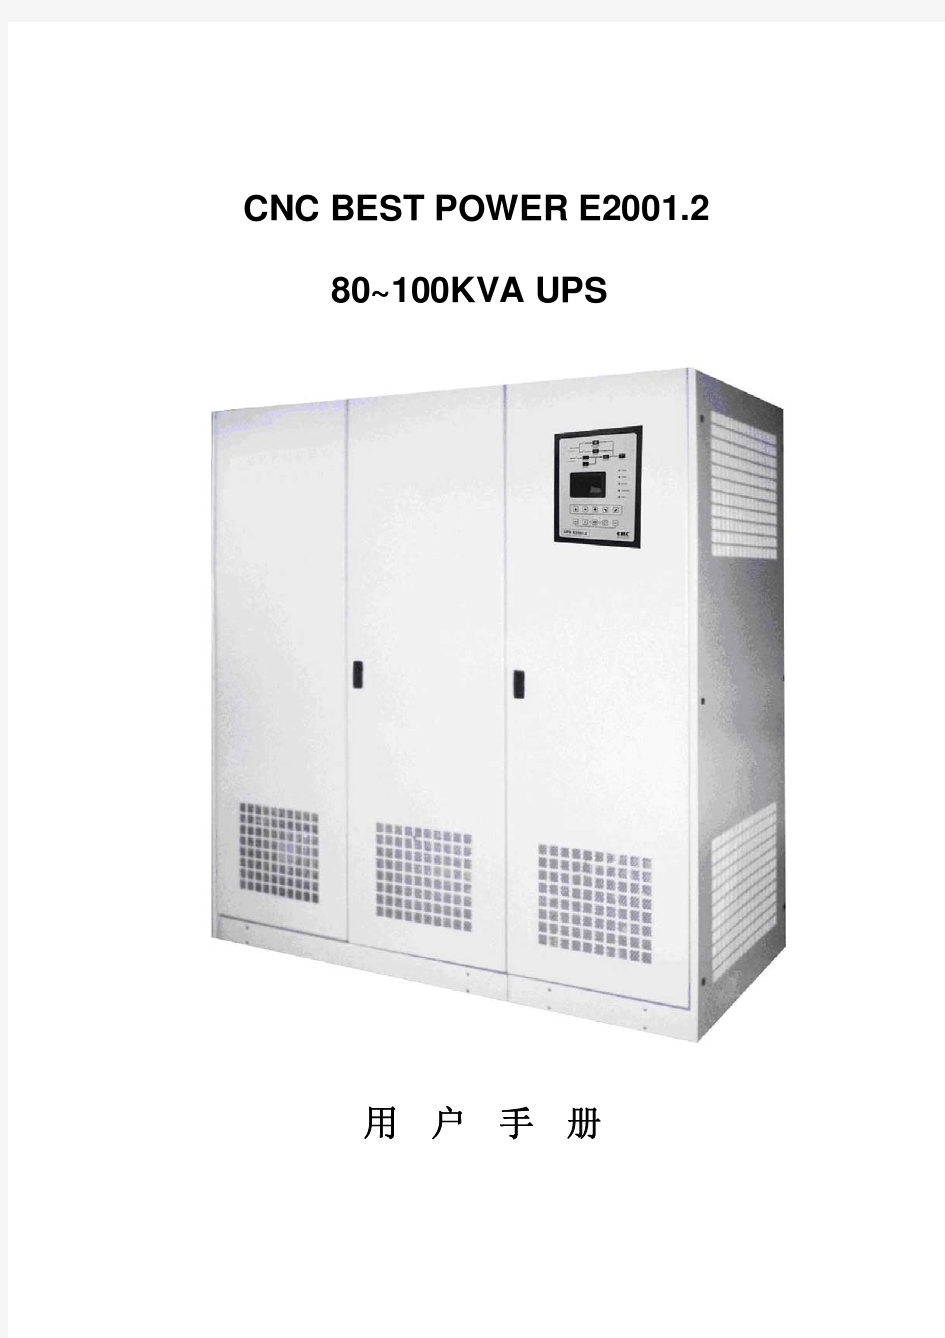 CNC BEST POWER E2001.2 80-100KVA UPS操作手册